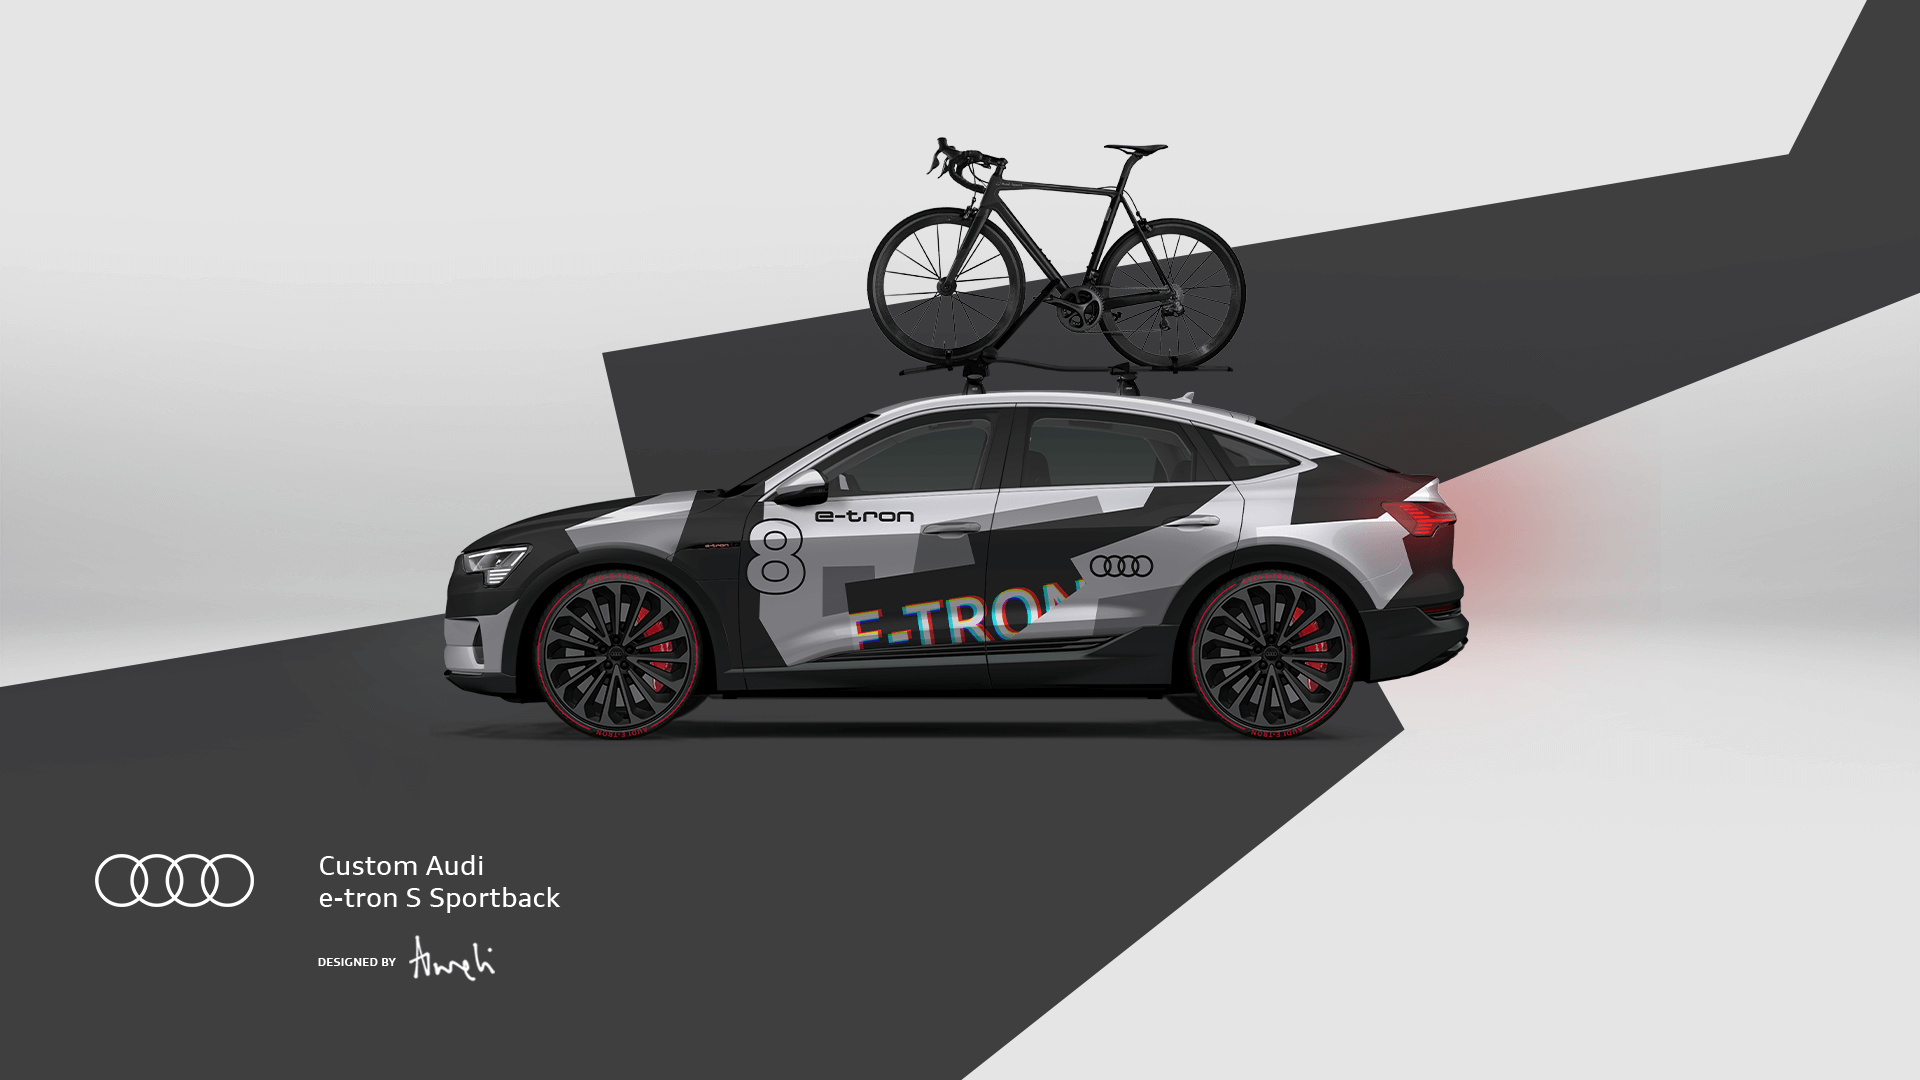 #custometron, Audi Custom e-tron Sportback social Campaign, Designed by Philipp Mandler